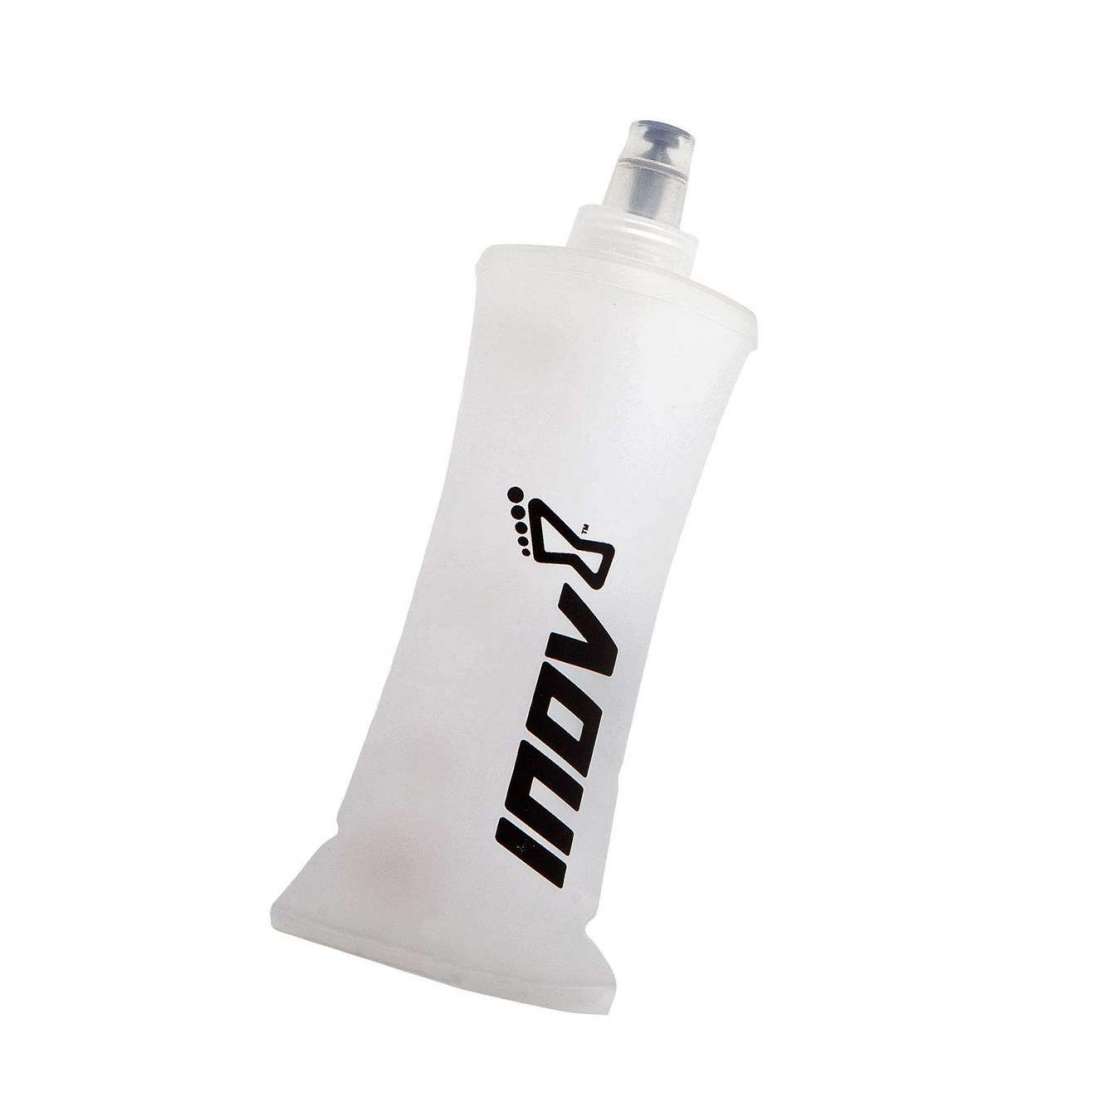 inov8 water bottle